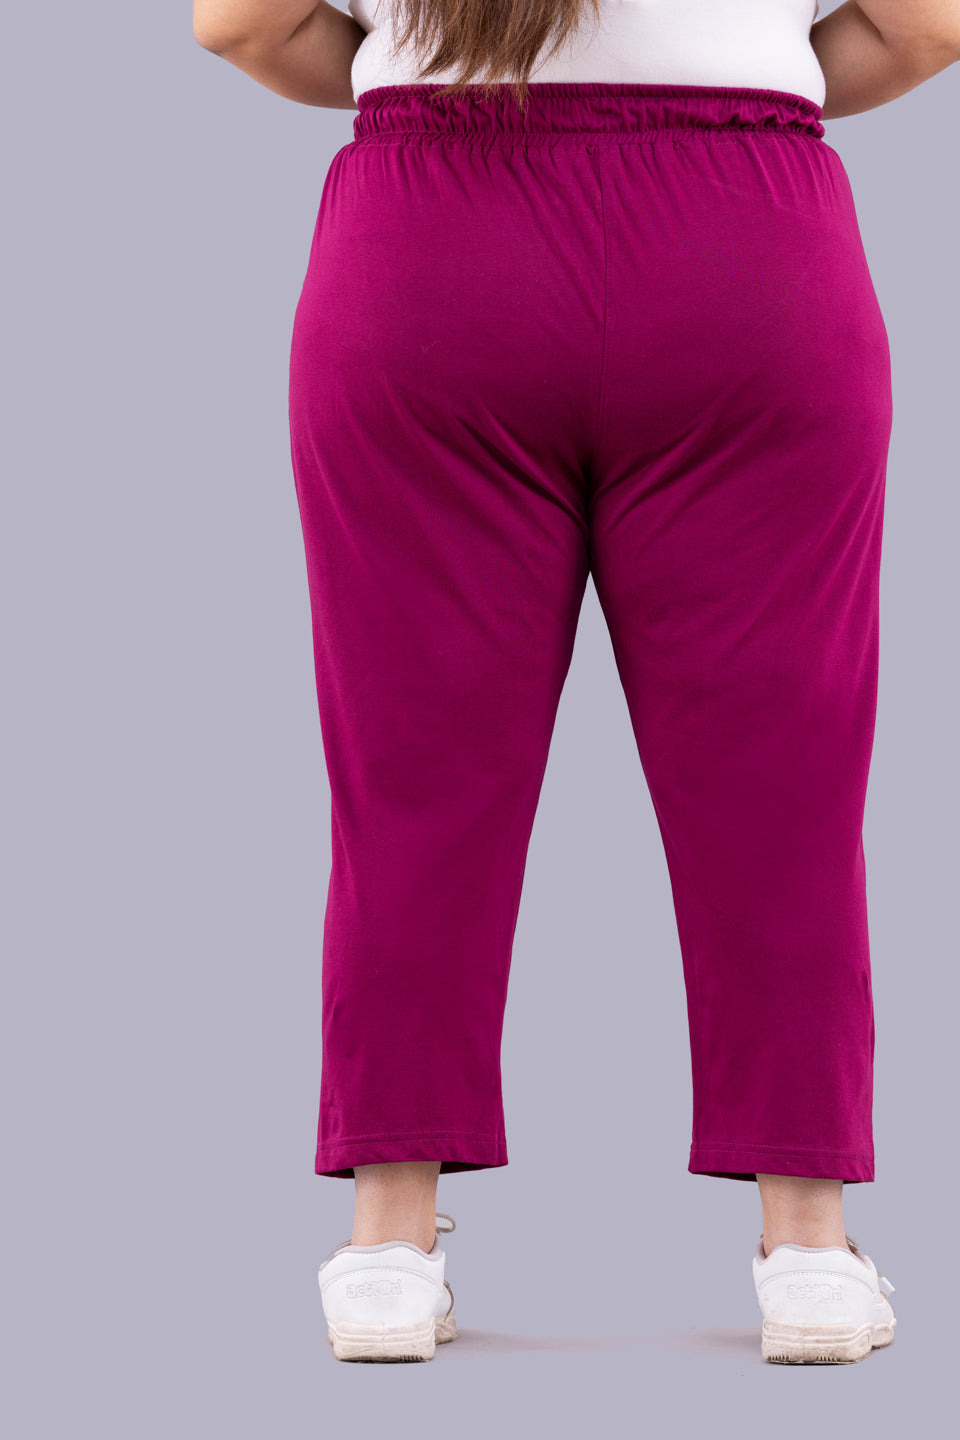 Buy Comfy Cardamom Green Half Cotton Capri Pants For Women Online